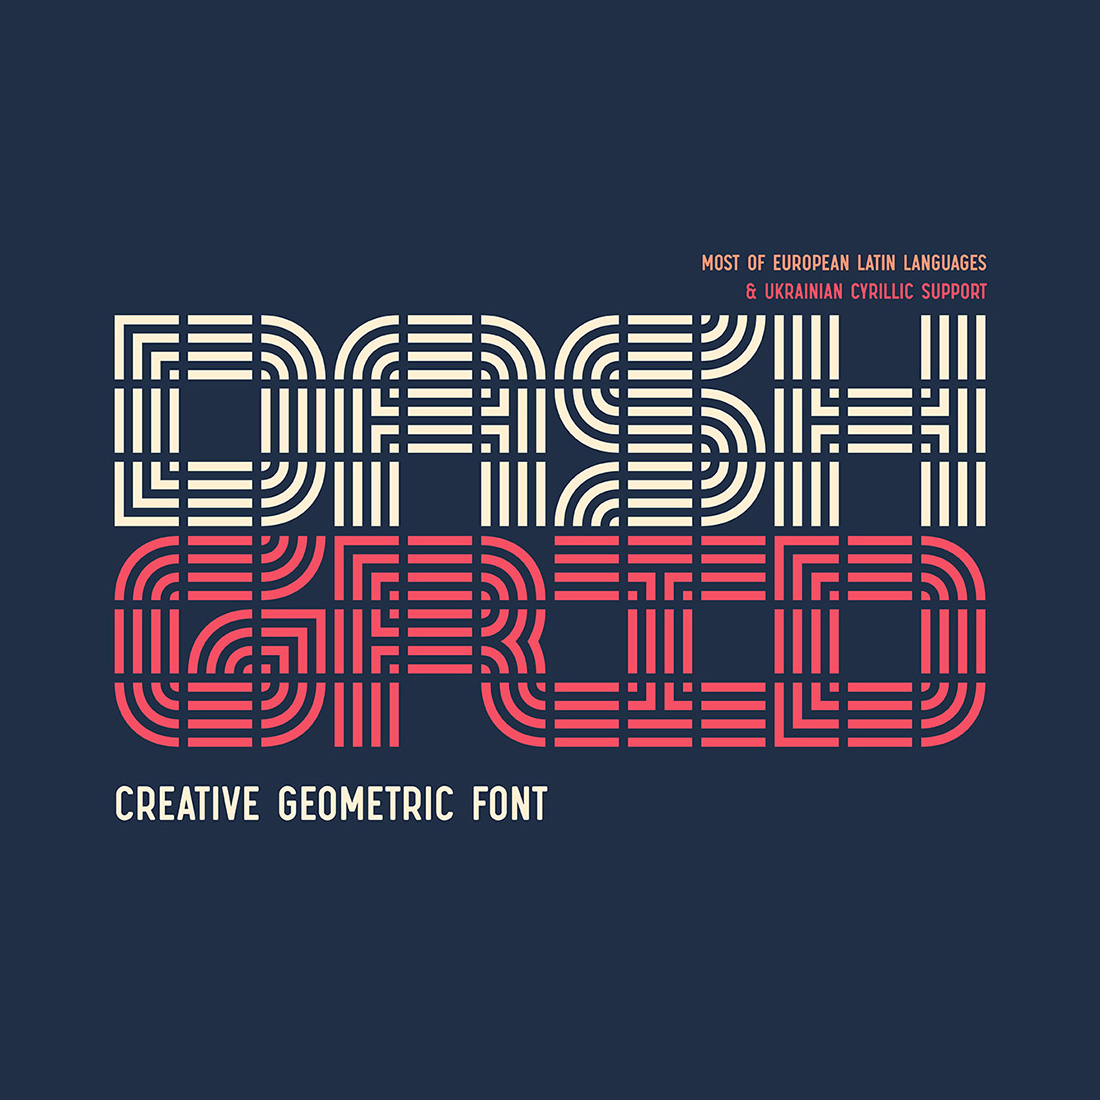 Dash Grid Font cover image.